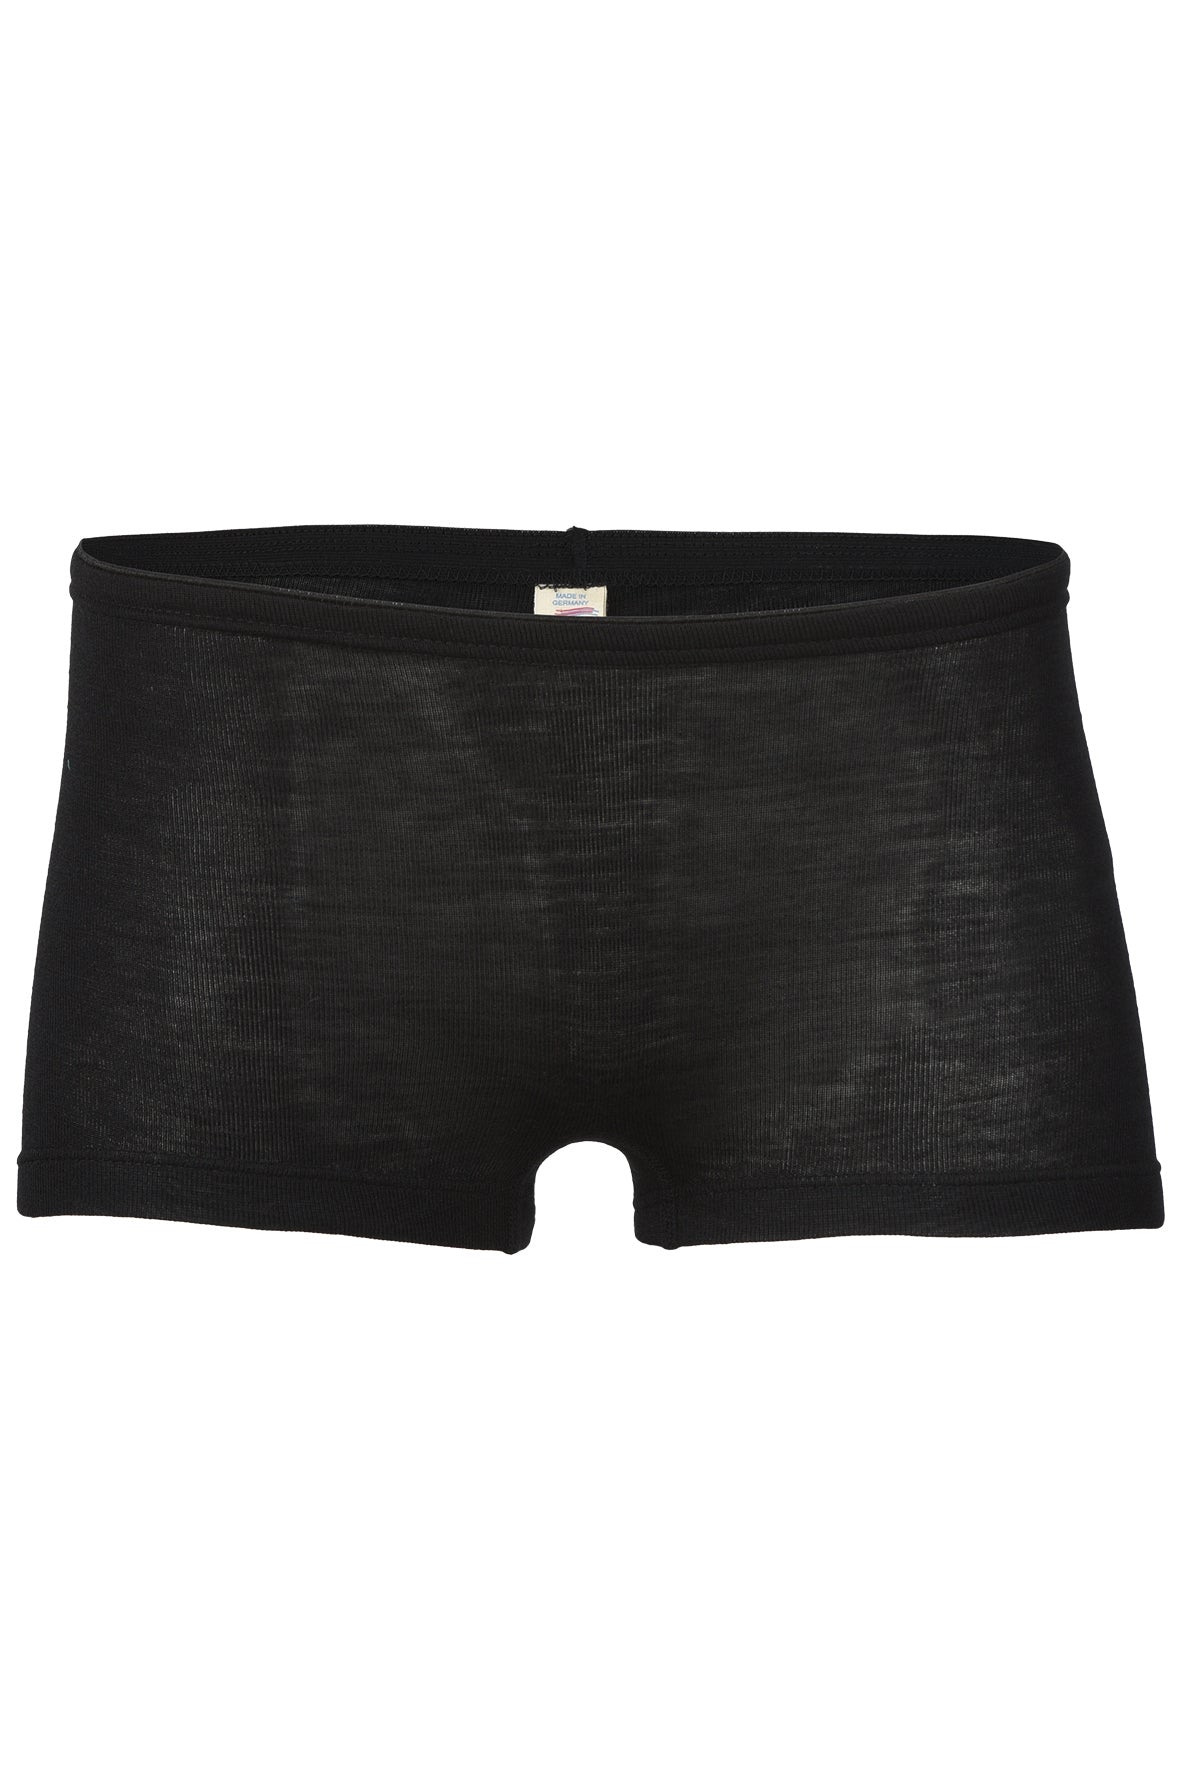 Women's Merino Wool Boxer Boyshorts * Light Underwear Panties